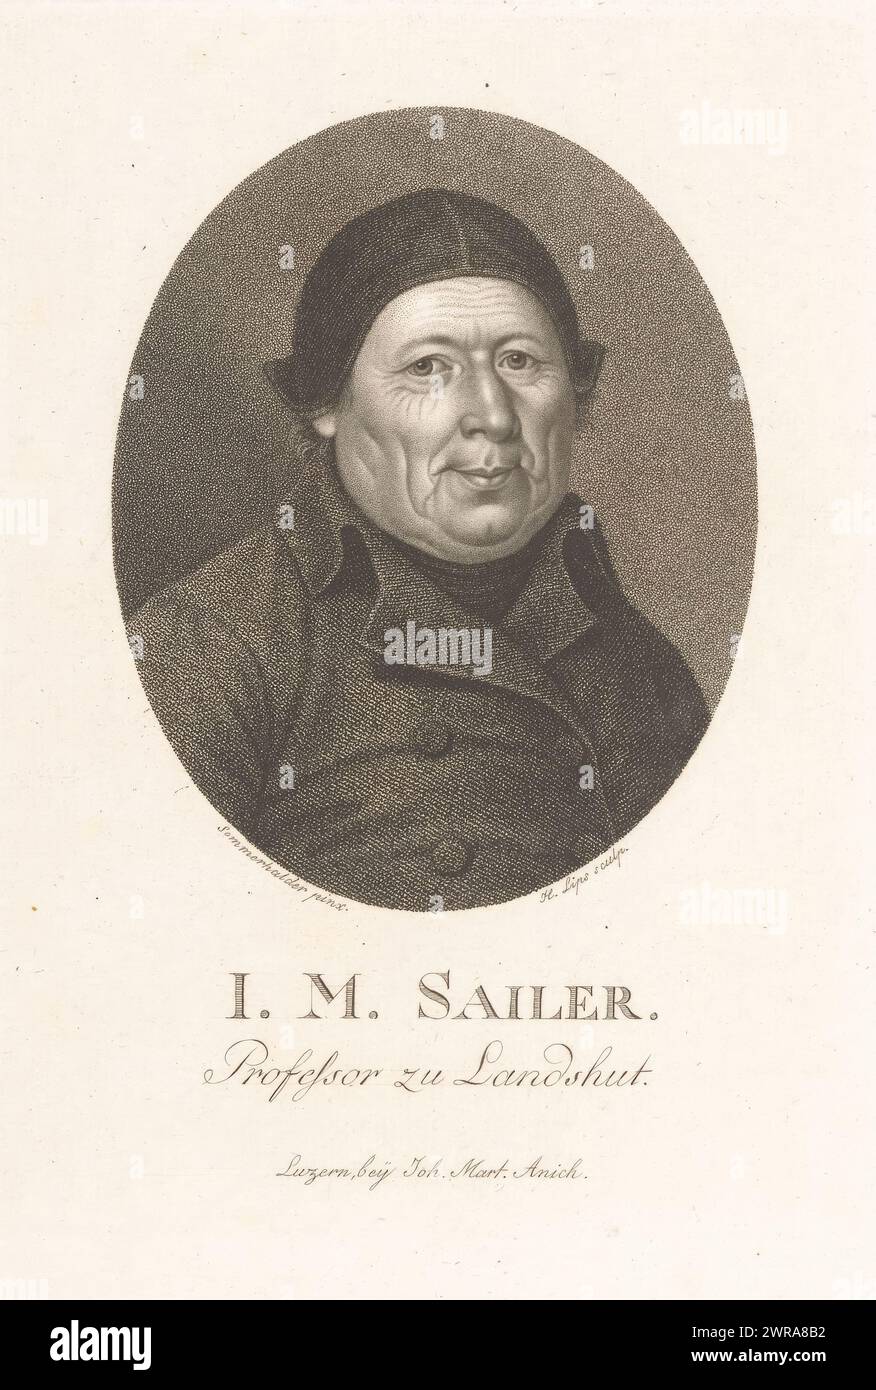 Portrait of Johann Michael Sailer, print maker: Johann Heinrich Lips, after painting by: Jakob Sommerhalder, publisher: Johann Martin Anich, 1768 - 1817, paper, engraving, width 159 mm × width 116 mm, print Stock Photo